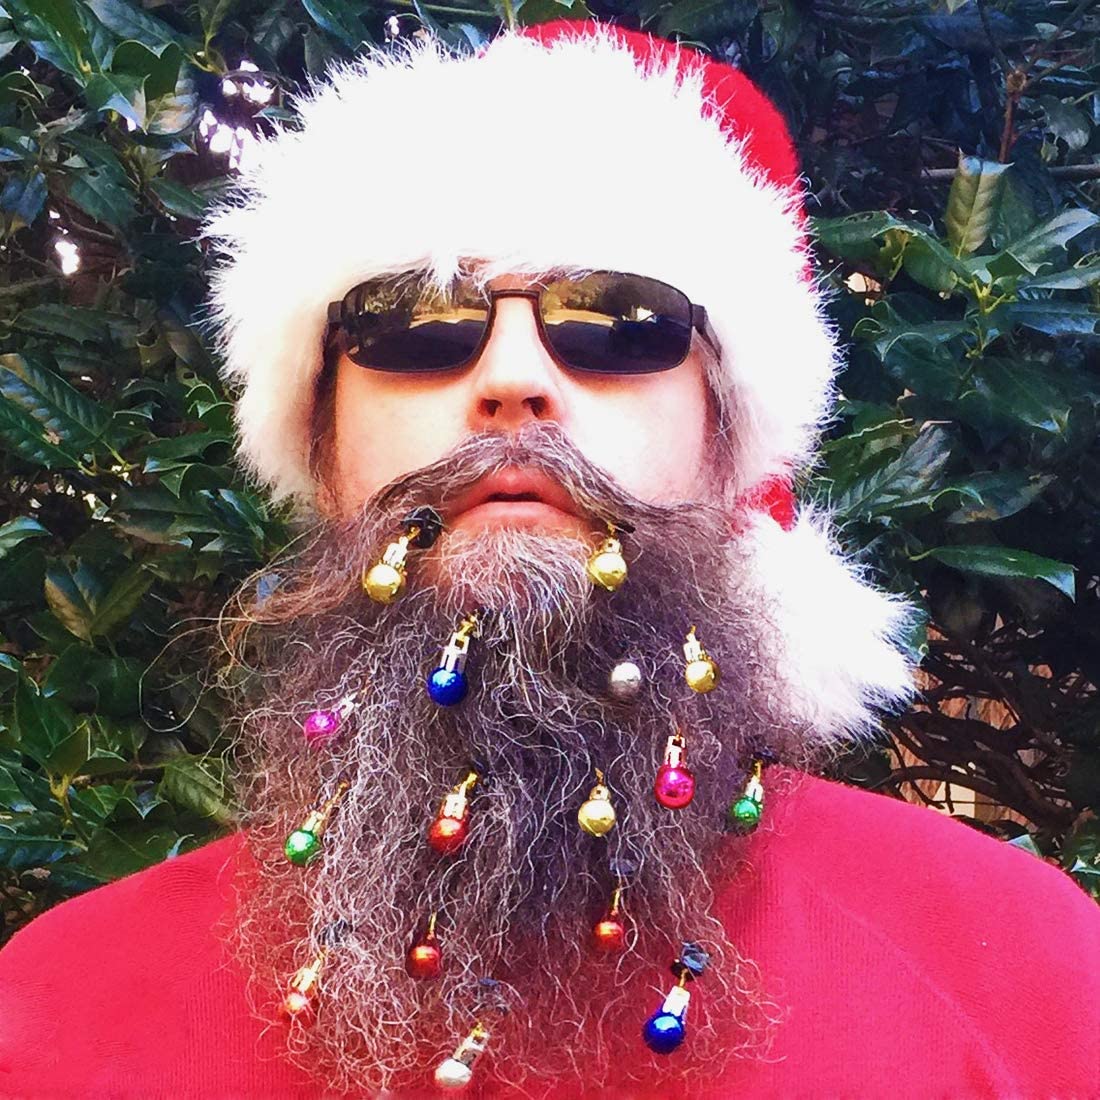 Beard Ornaments Add Holiday Cheer